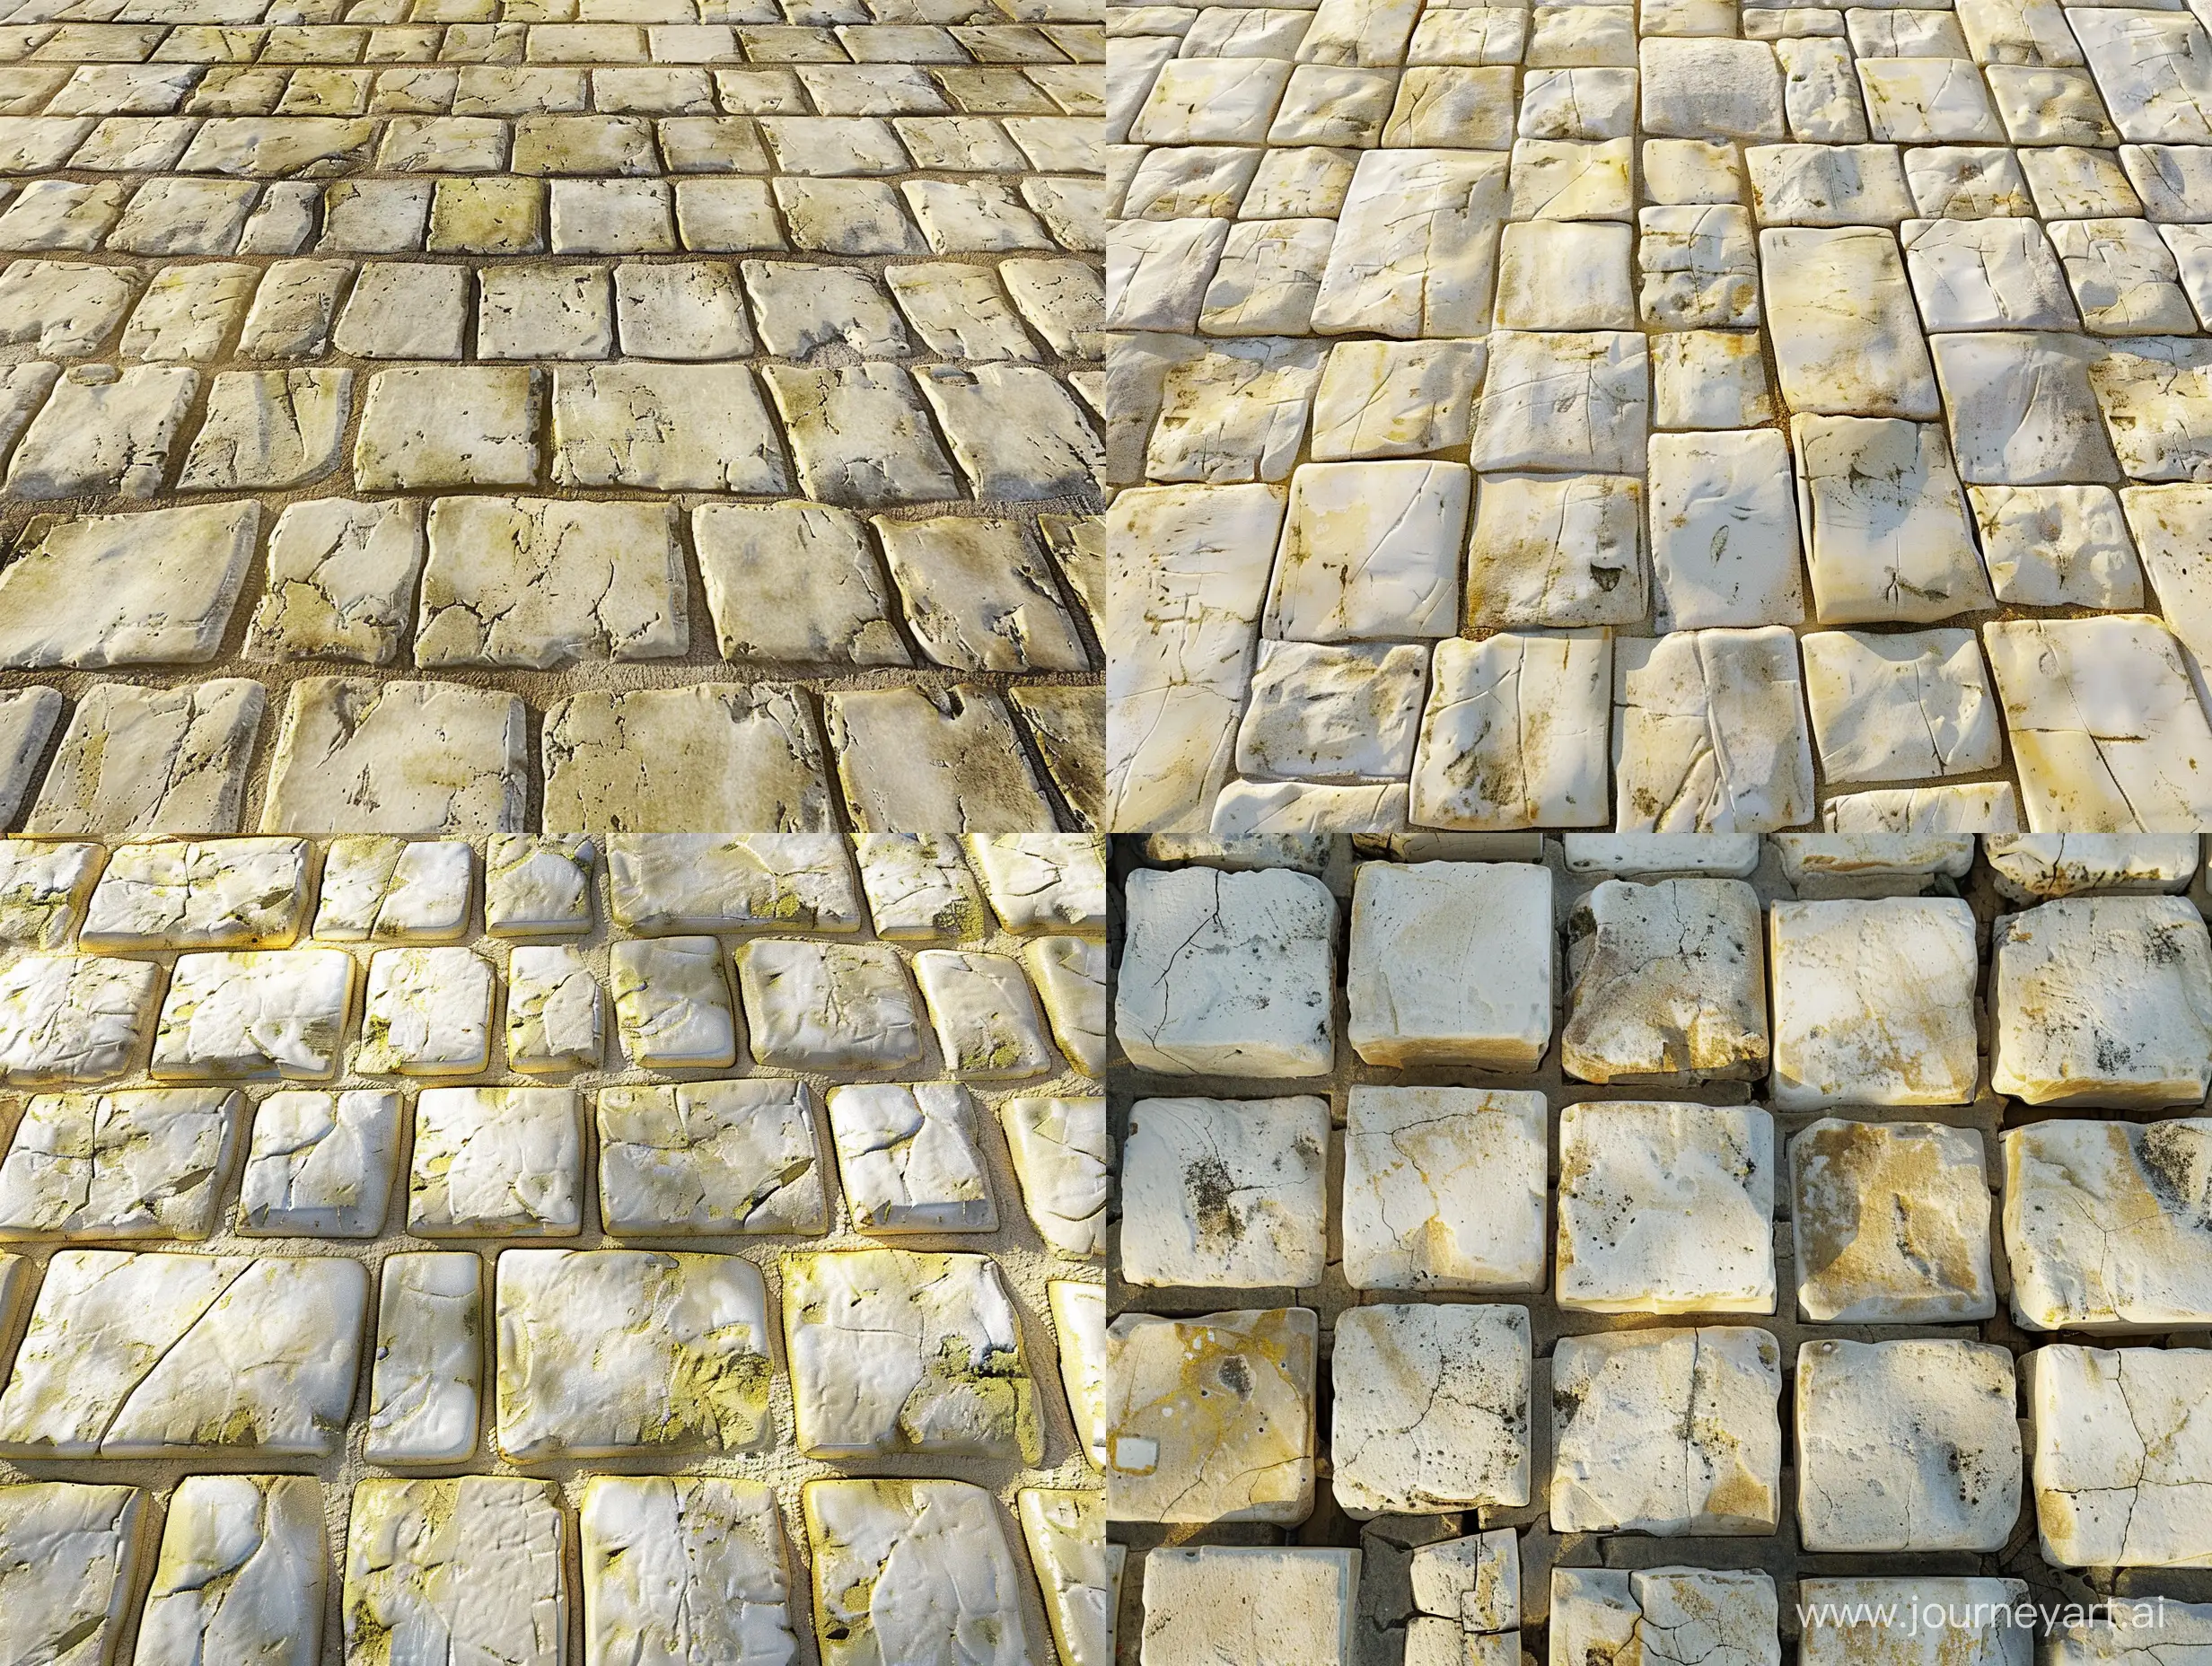 regular white-yellowish bricks placed kinda randomly on the ground
camera angle is from top